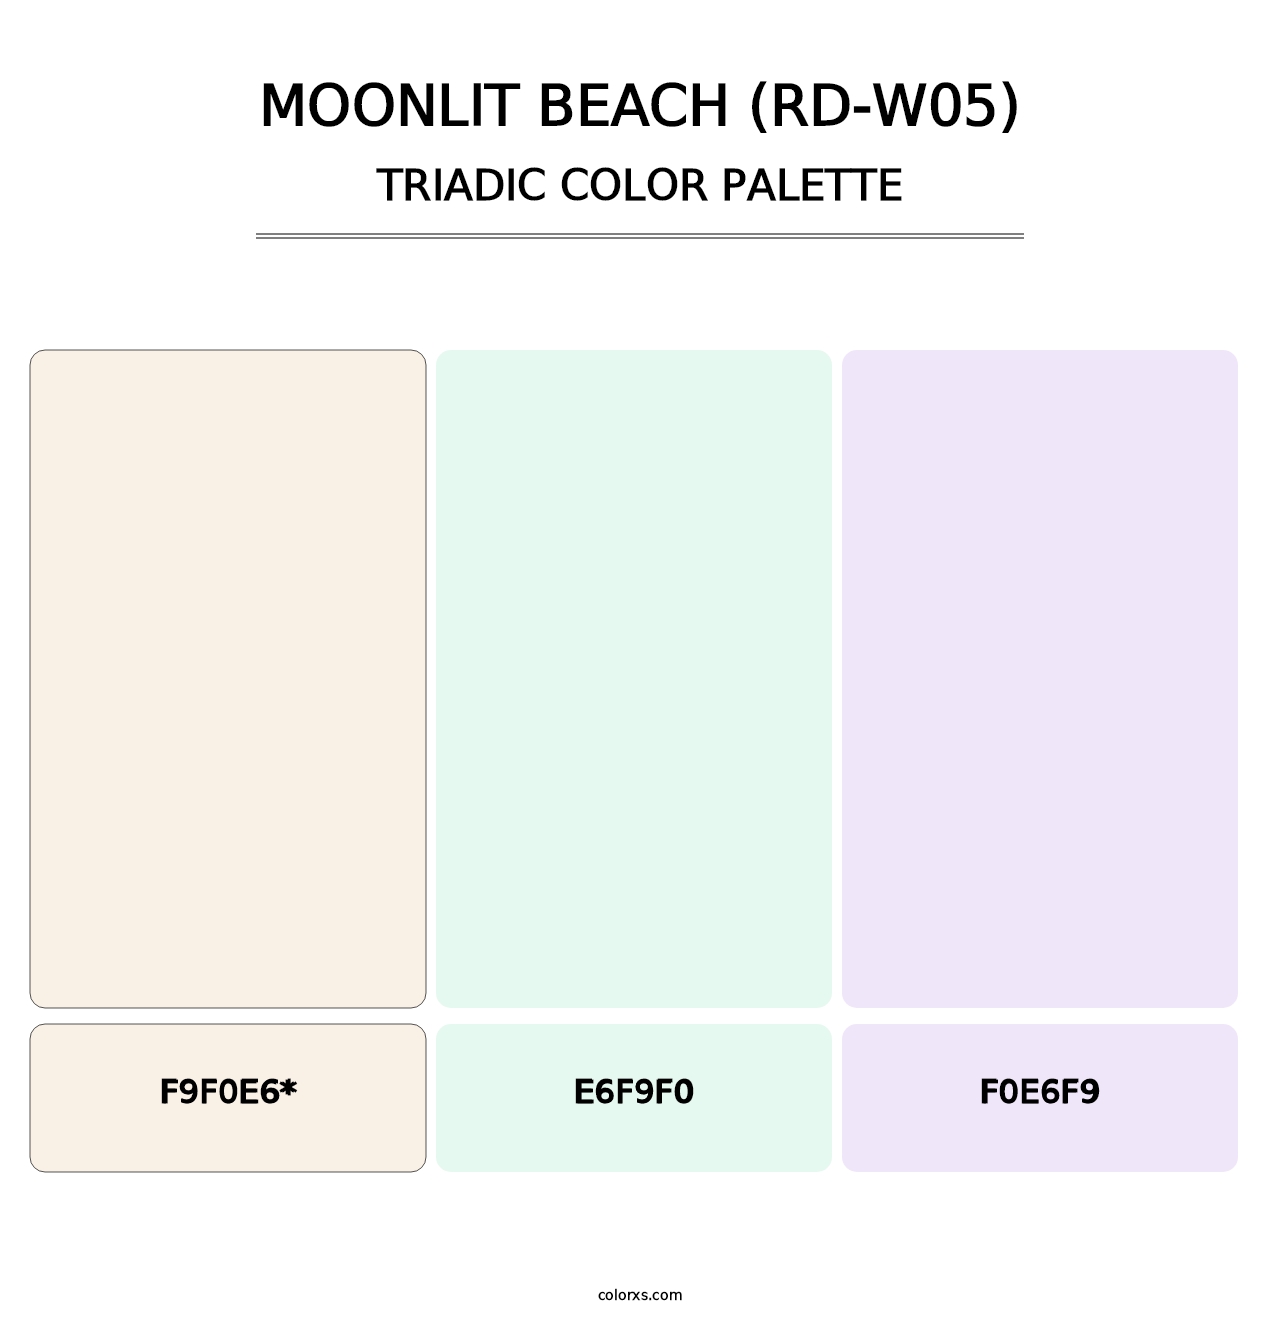 Moonlit Beach (RD-W05) - Triadic Color Palette